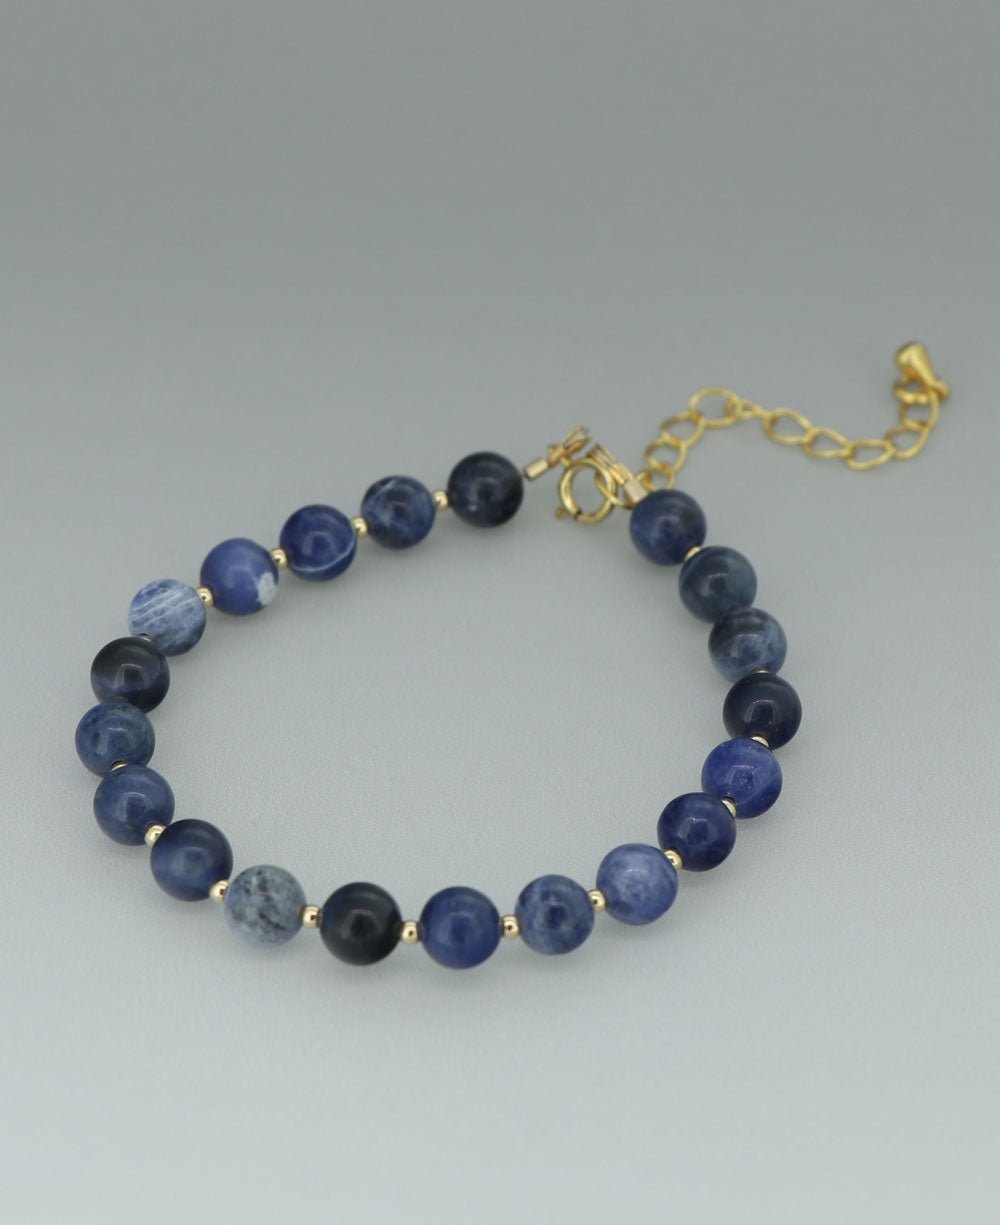 Gemstone Wrist Mala Bracelet, 20 Beads - Bracelets Sodalite